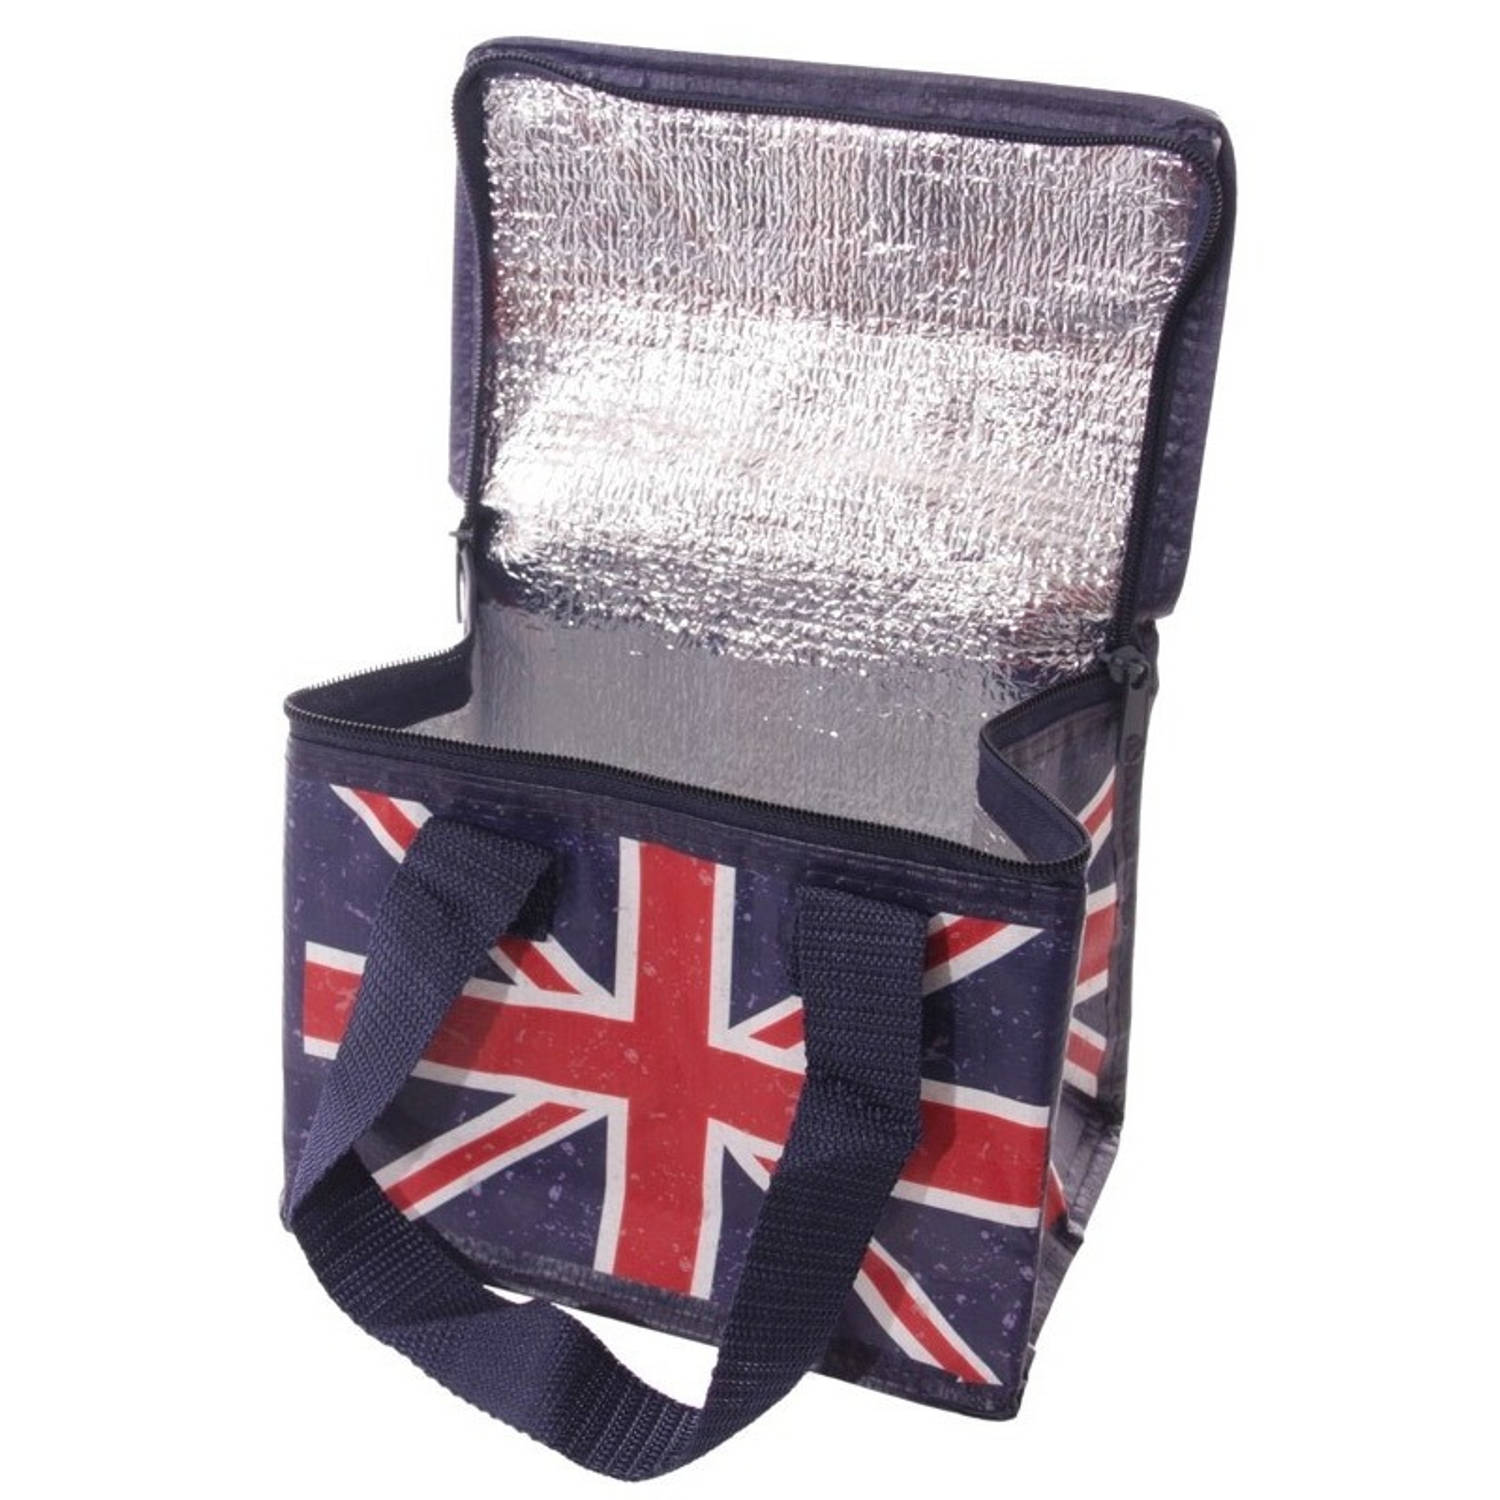 Kleine koeltas Union Jack/United Kingdom print voor 6/sixpack blikjes - Koelboxen/koeltassen - Lunchtrommel